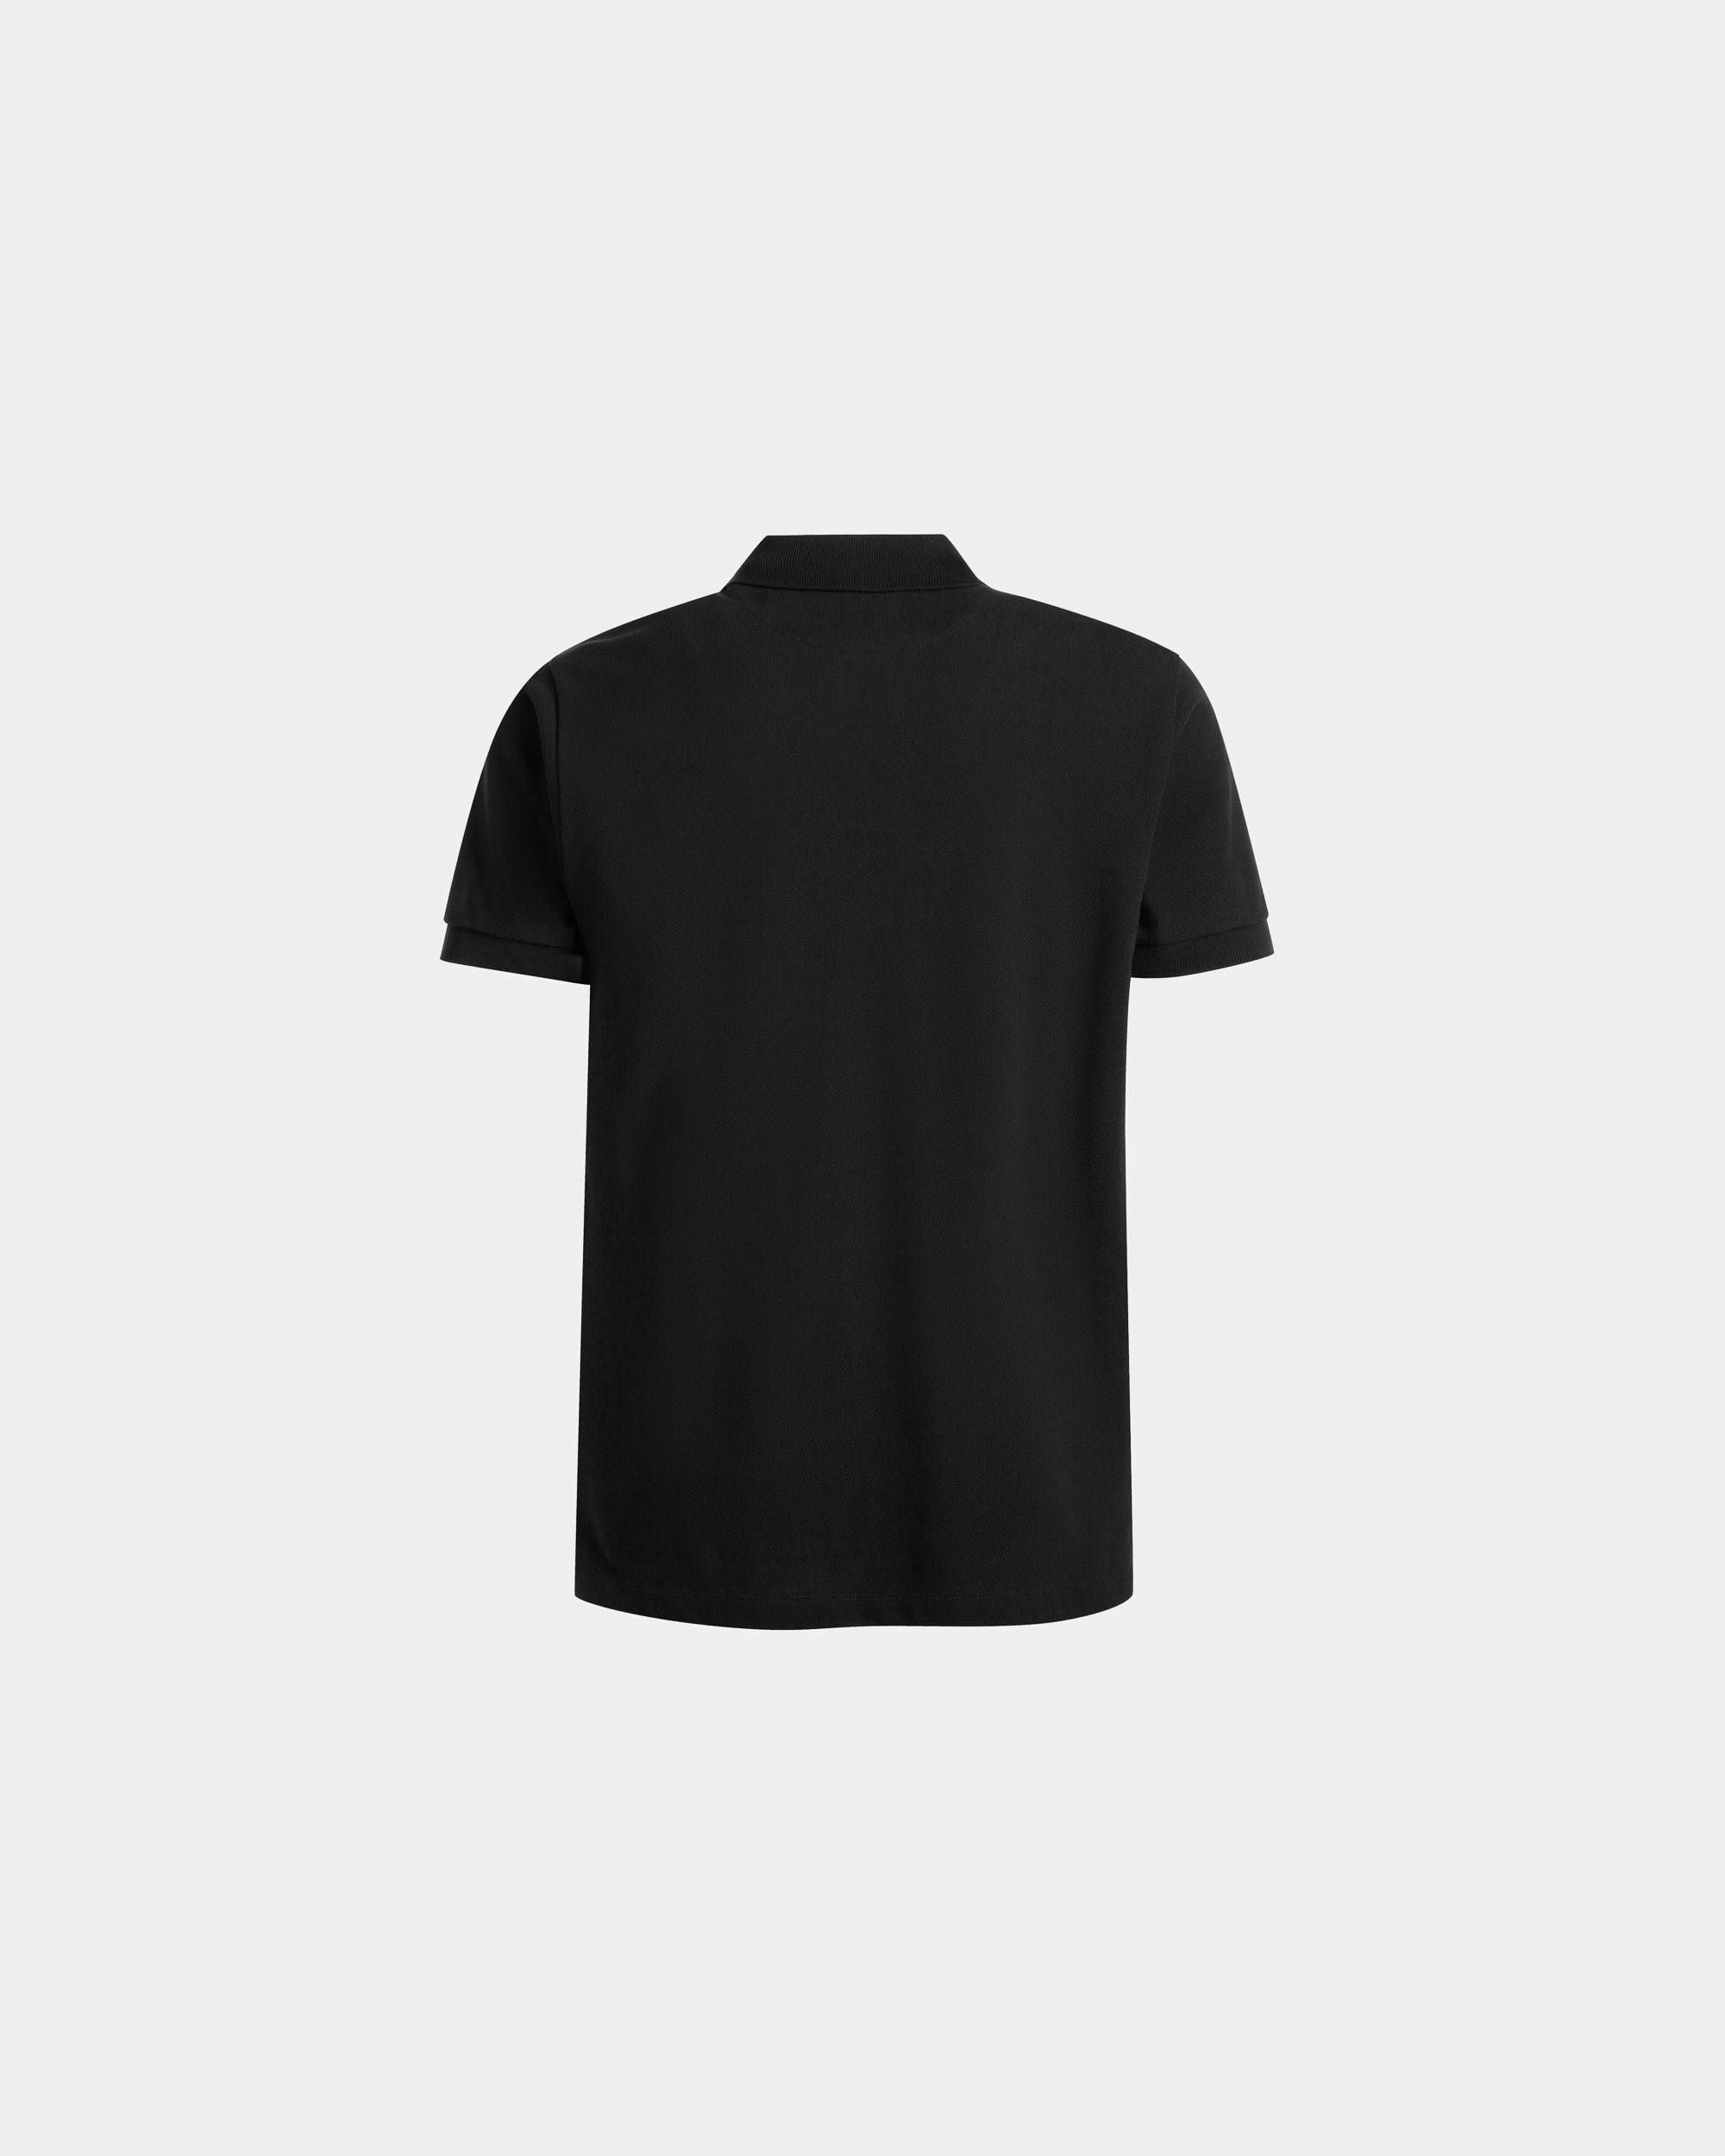 Emblem Poloshirt | Poloshirt für Herren | Schwarze Baumwolle | Bally | Still Life Rückseite